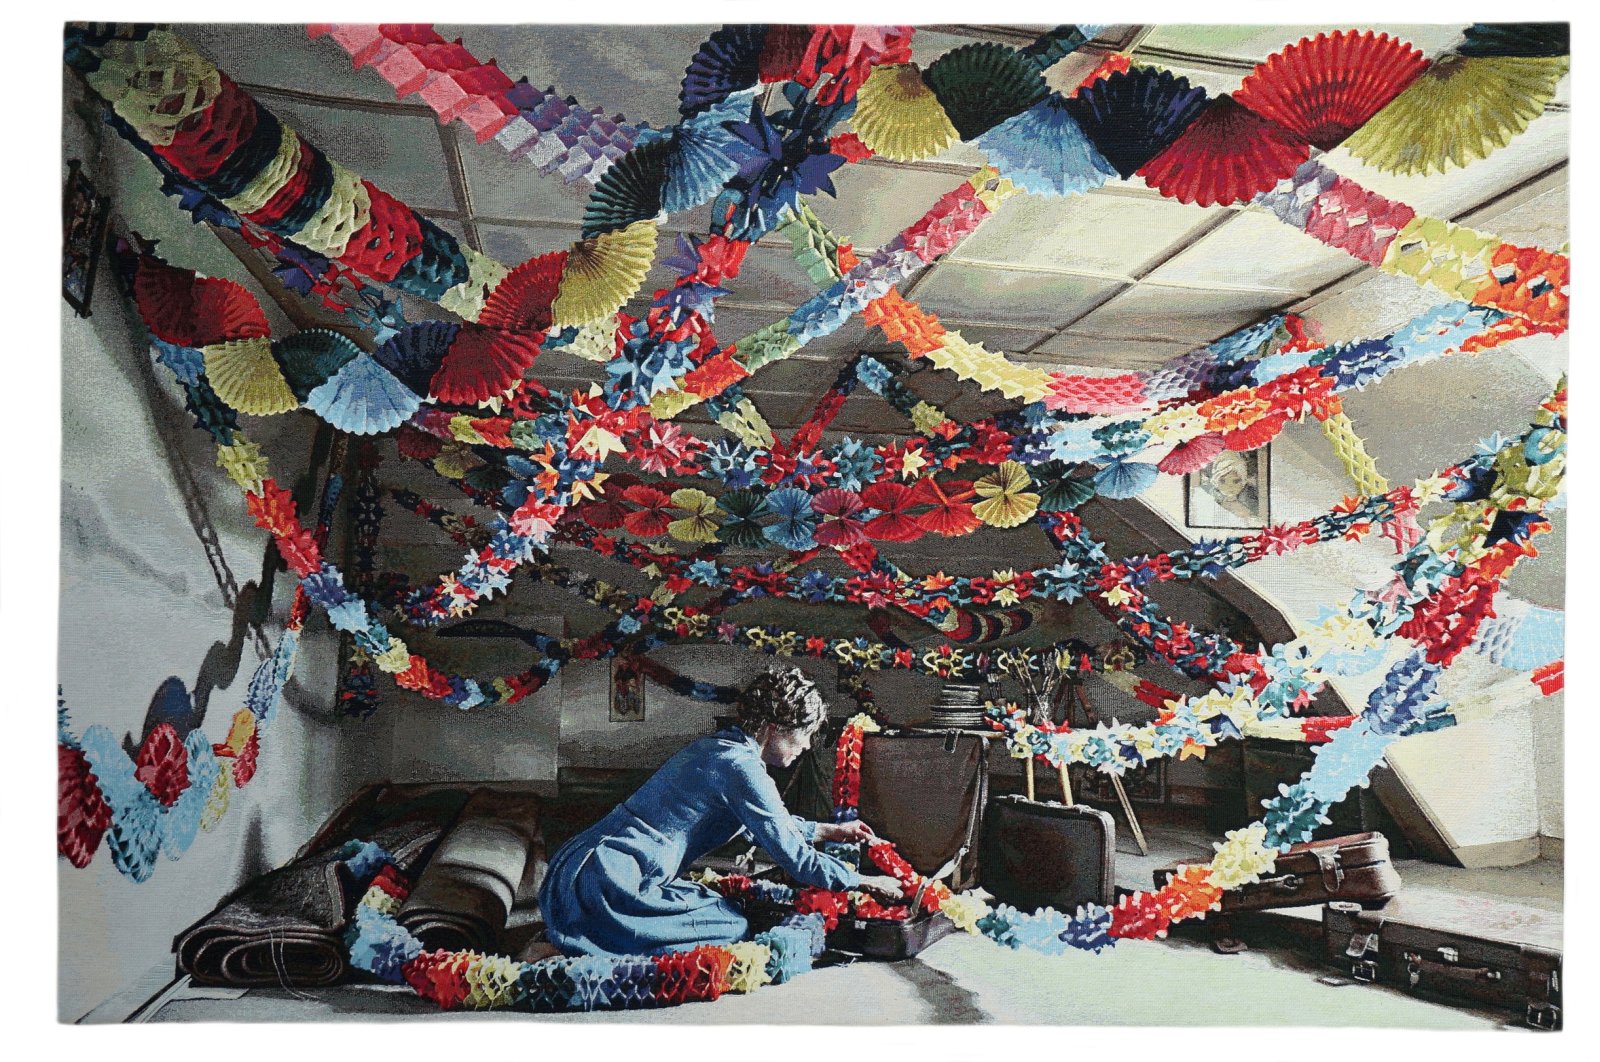 Pameran meneliti seni tekstil kontemporer di Ankara, Turki